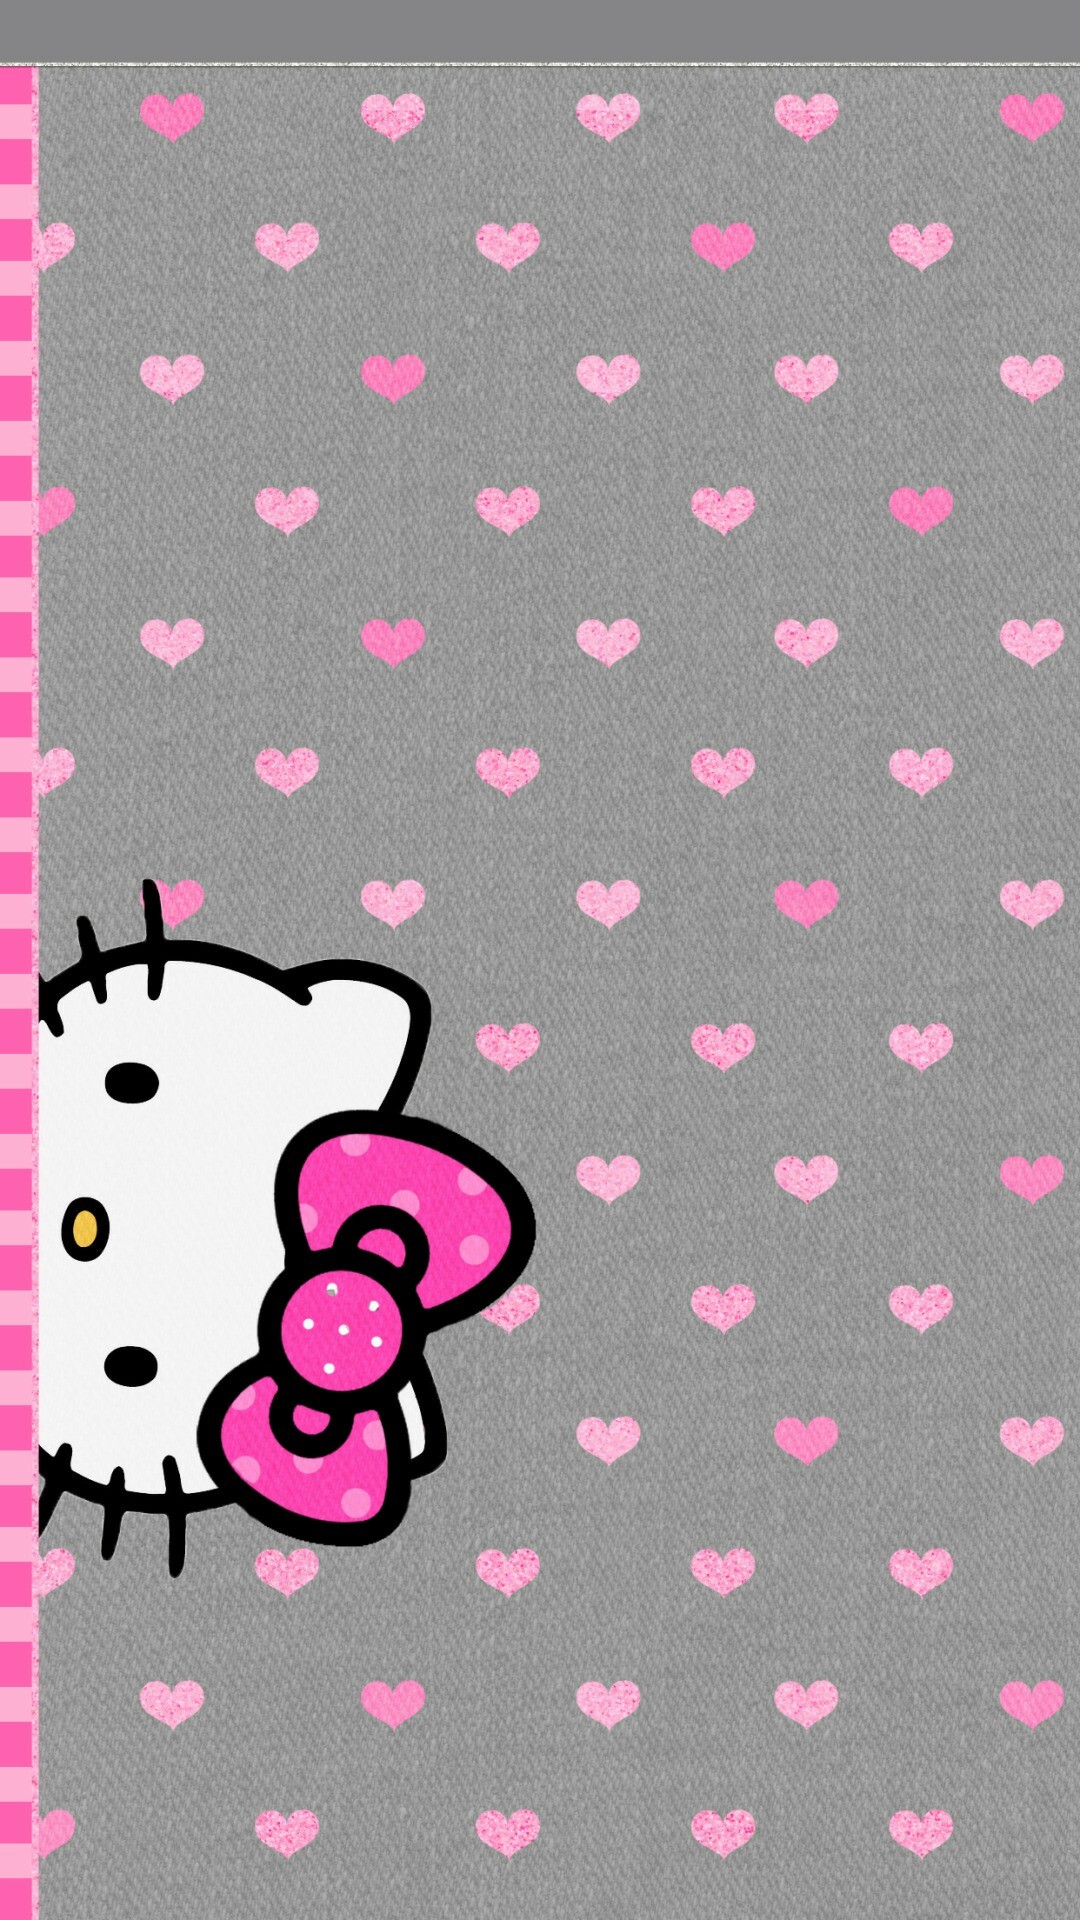  Hello  Kitty  Wallpaper  Pink and Black   WallpaperTag